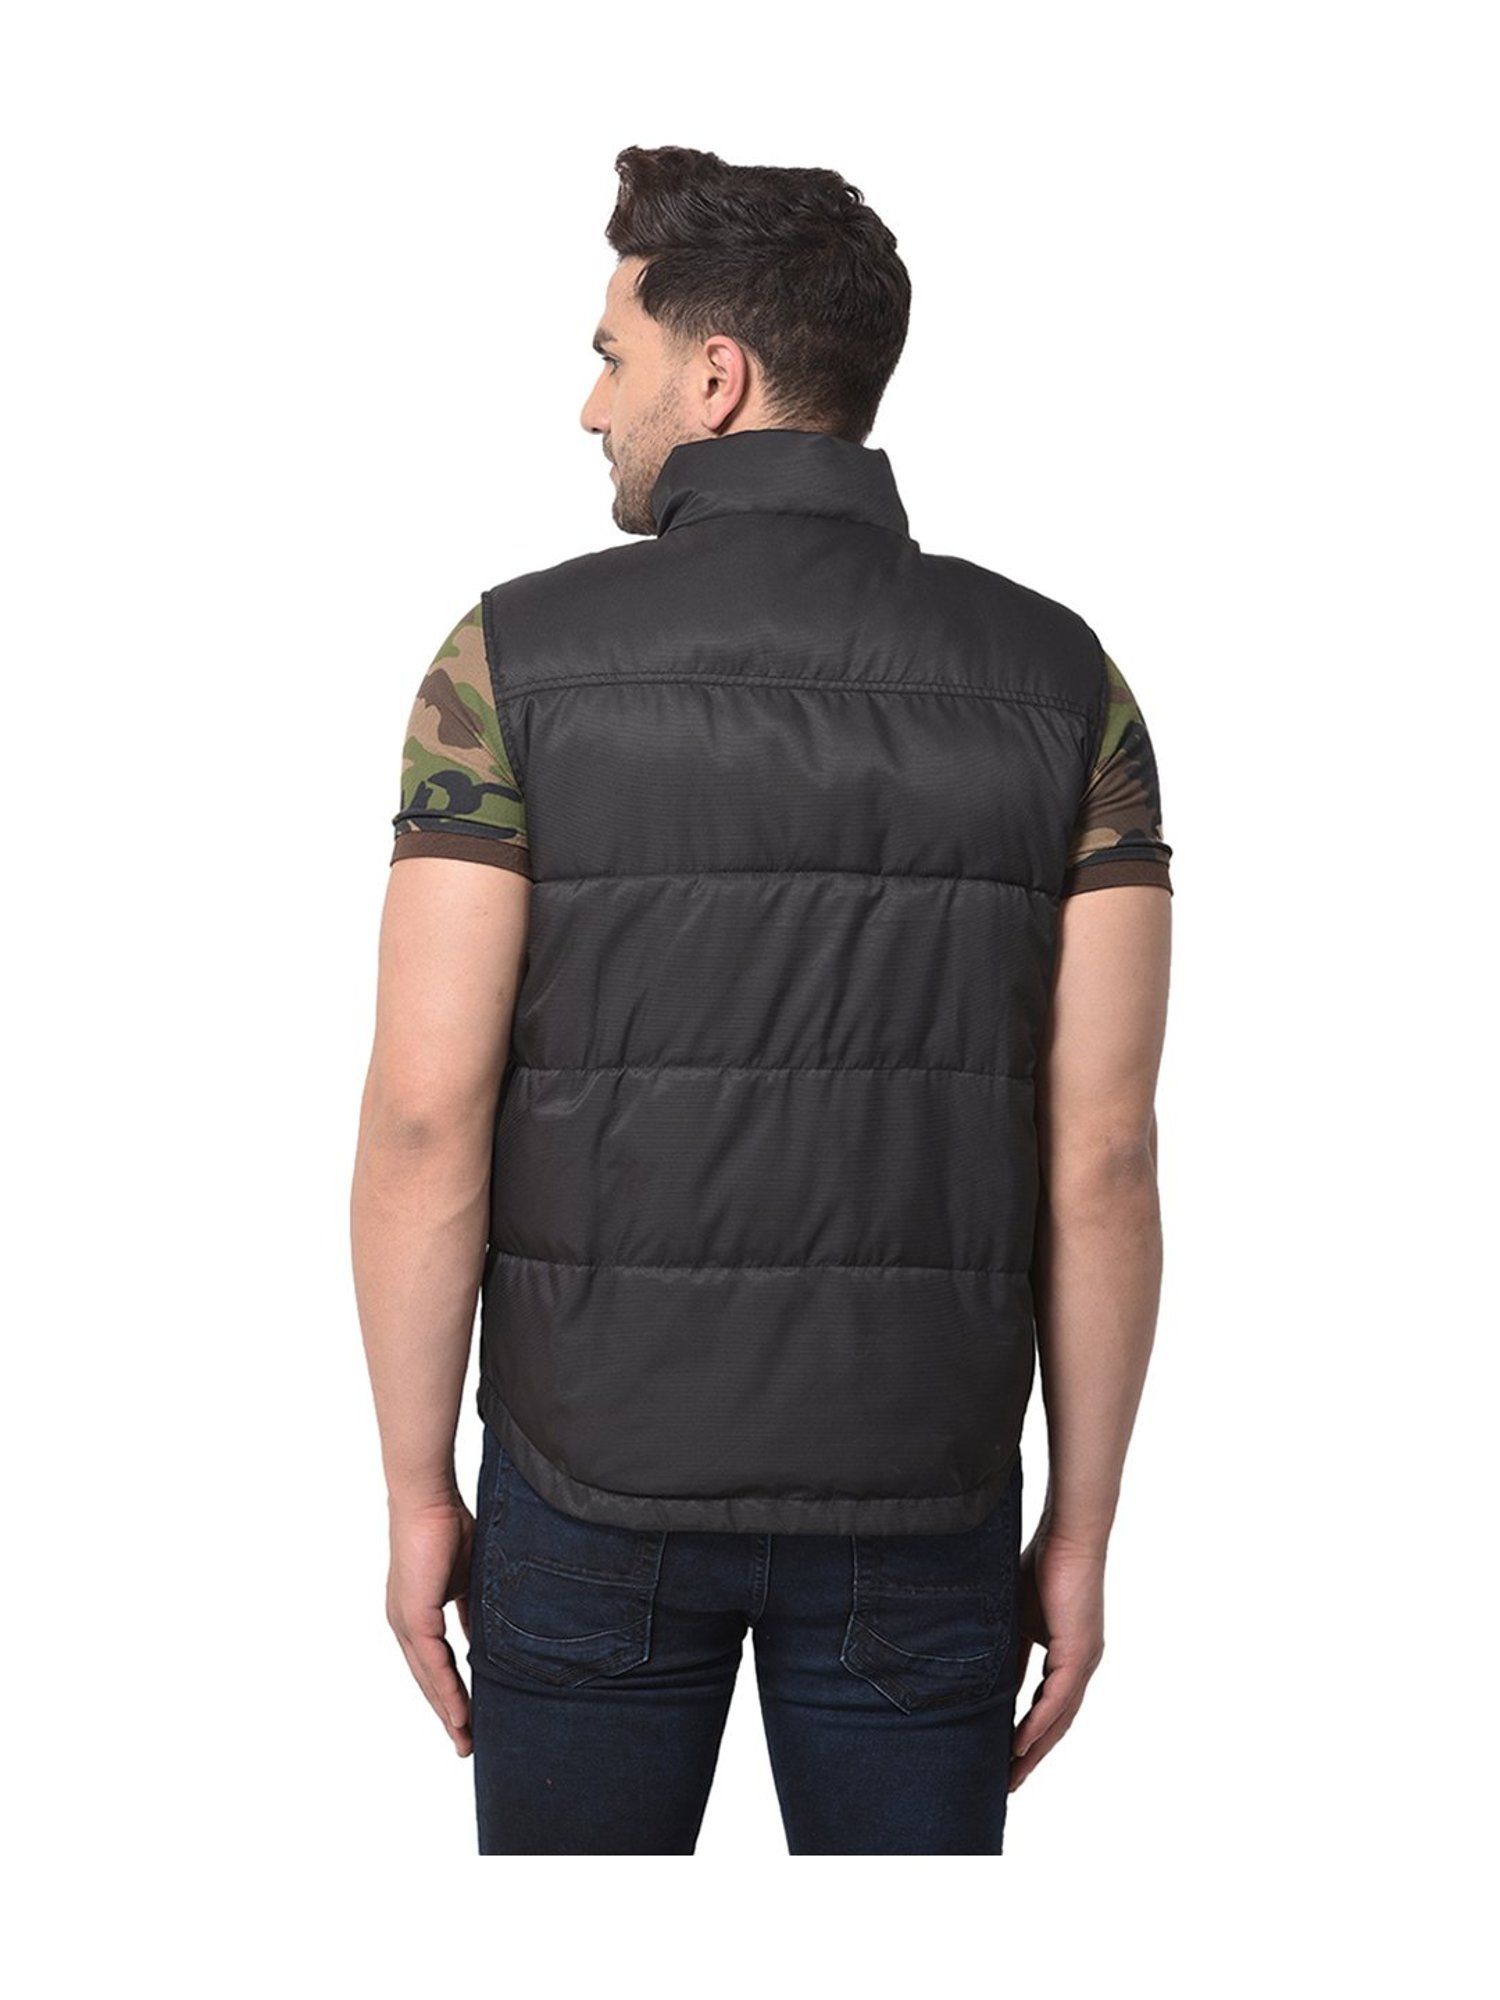 Denim Stitching Jacket | Bdu Woodland Jacket | Denim Smart Jacket |  Woodlands Coat - Mens - Aliexpress